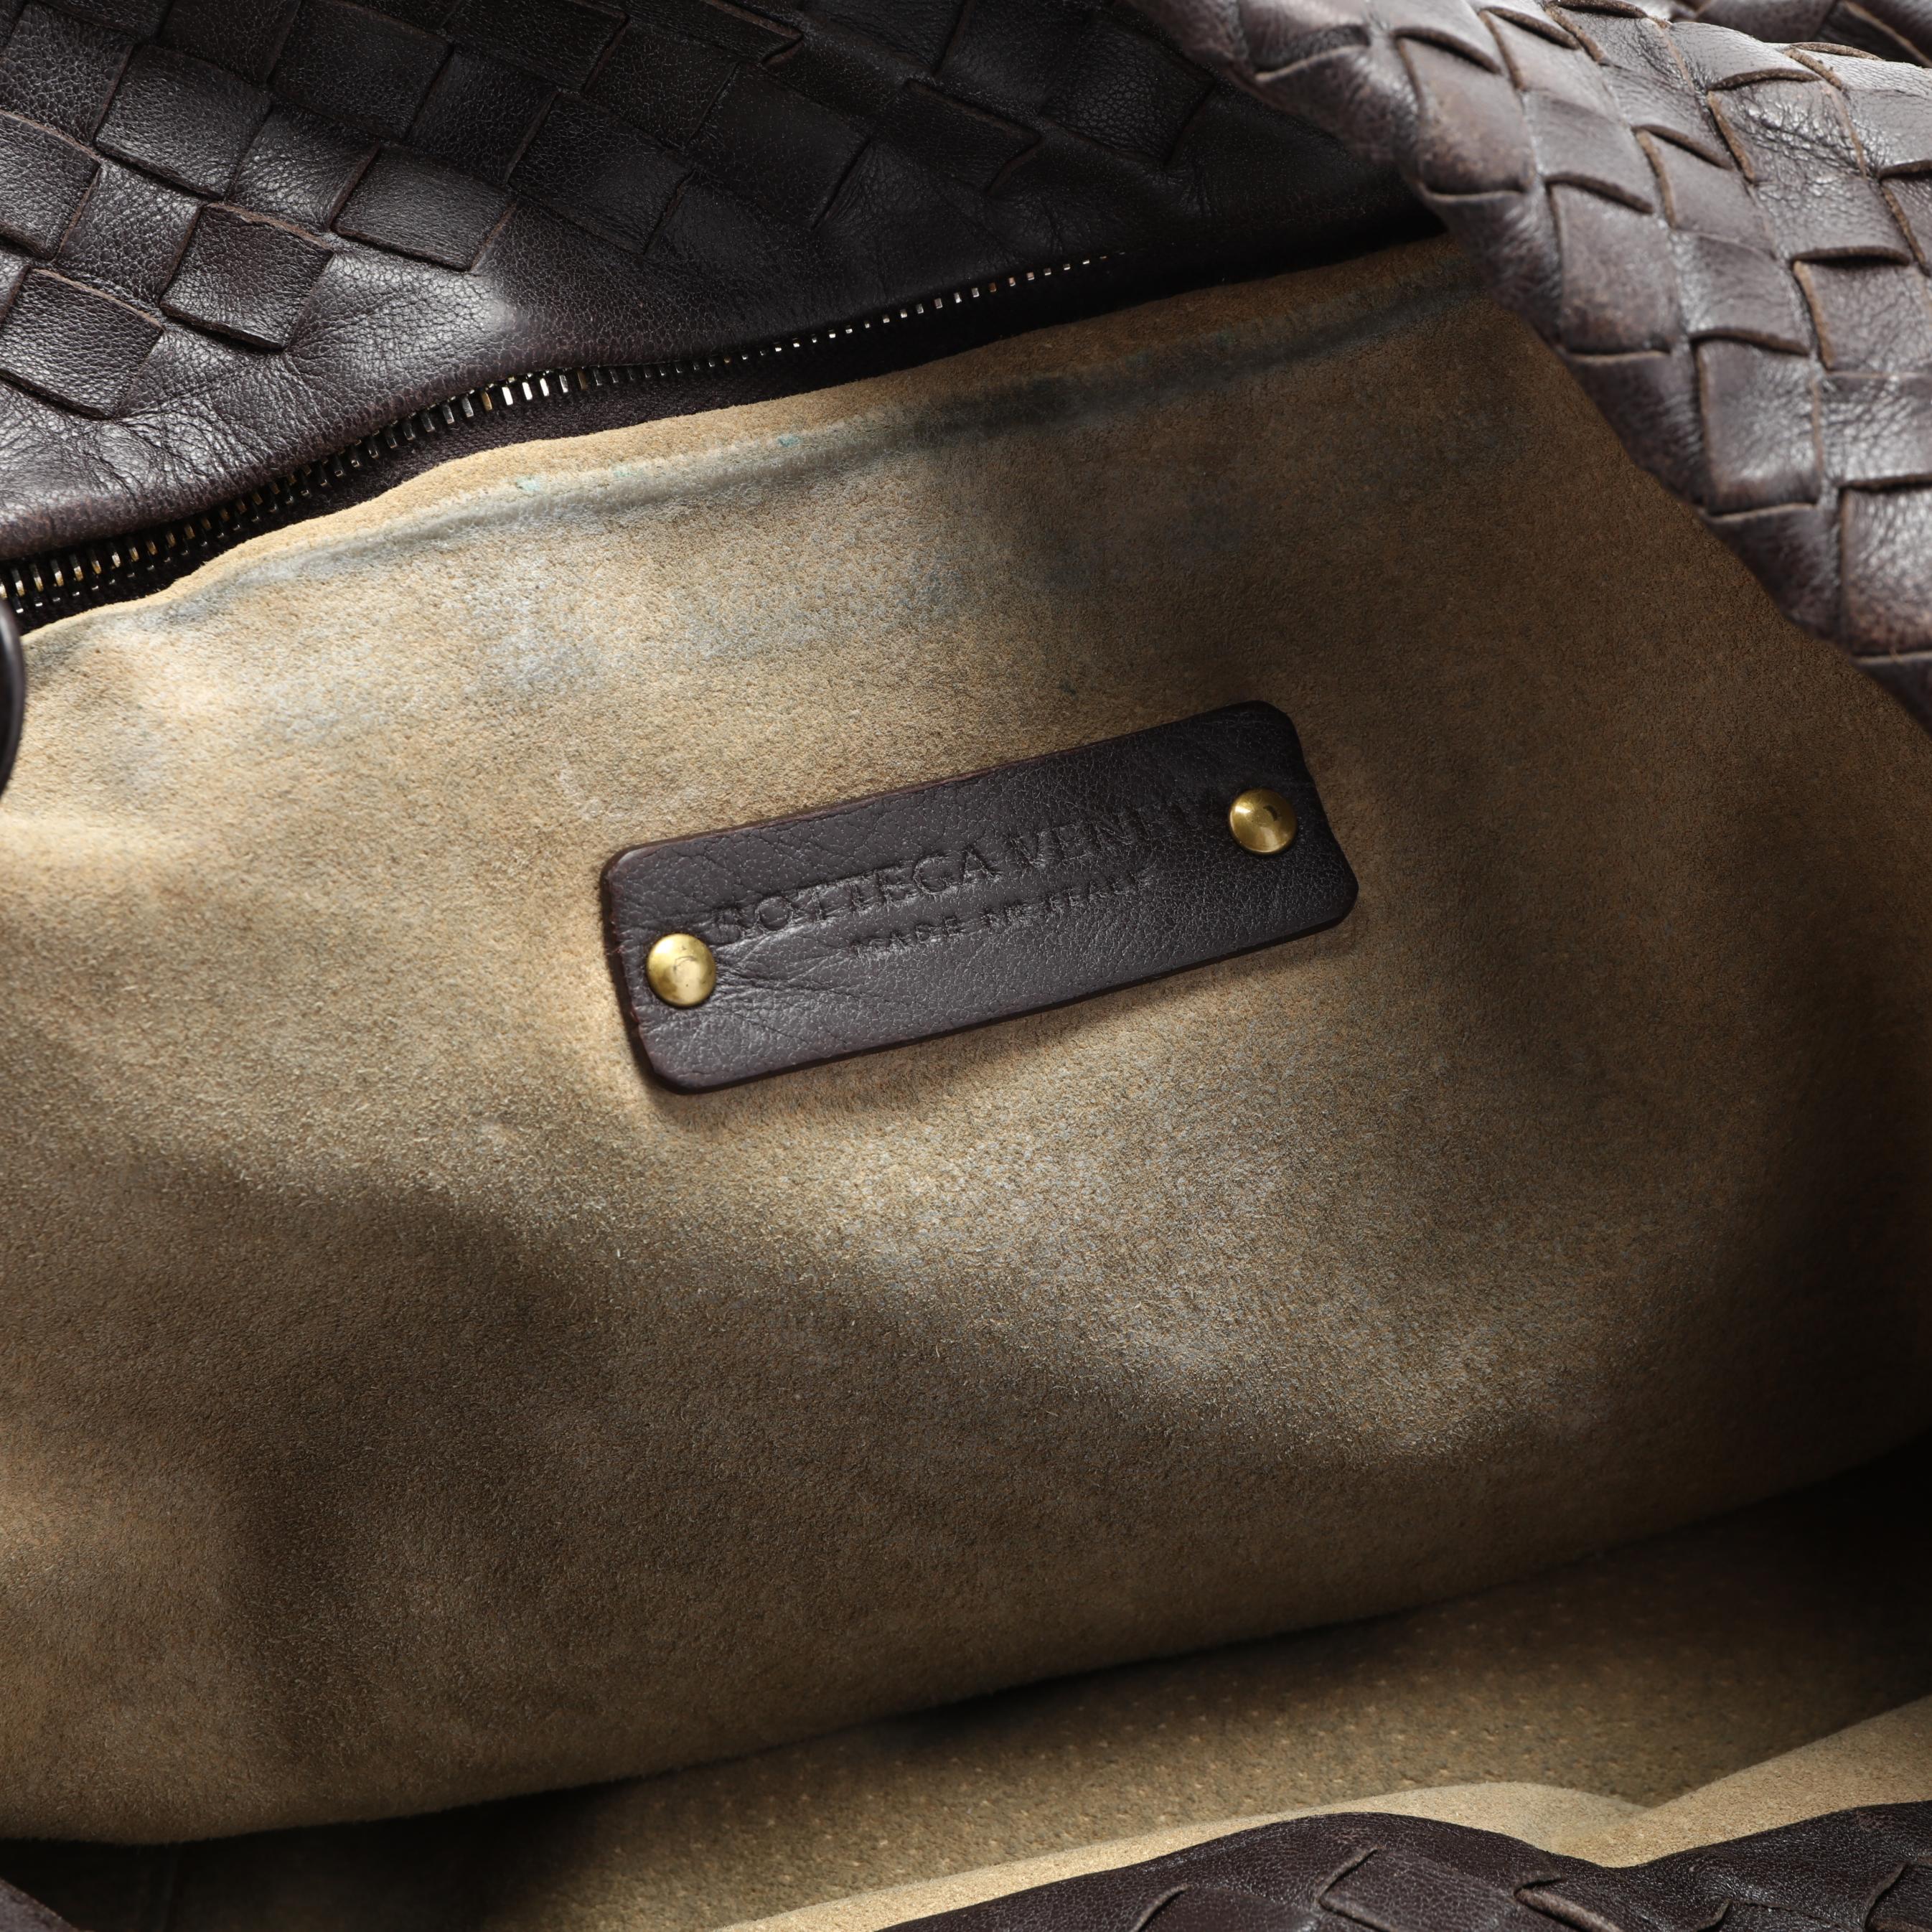 Sold at Auction: Two Vintage Bottega-Veneta Vintage Handbags